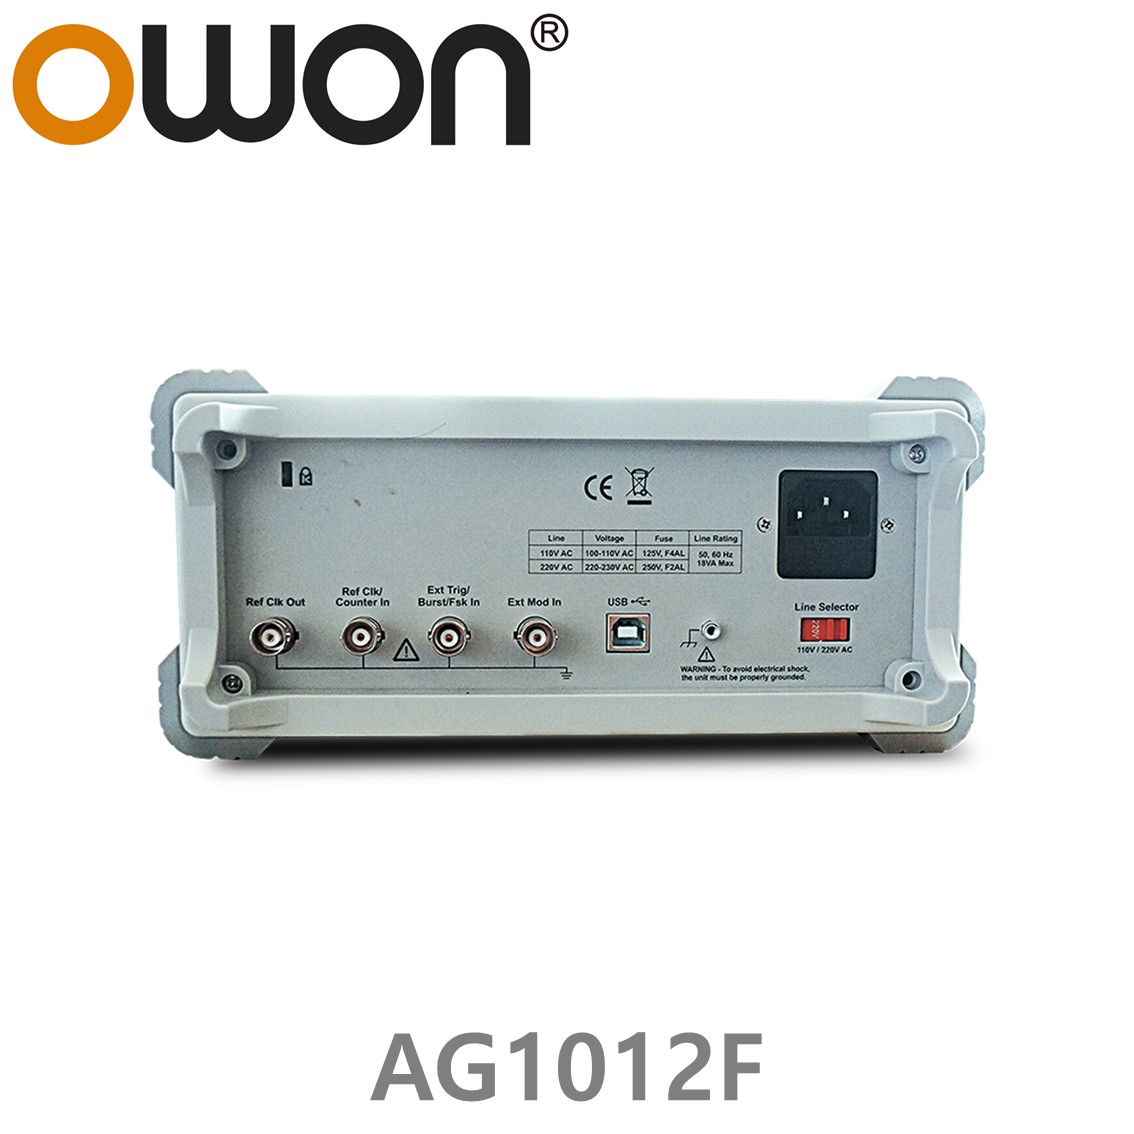 [ OWON ] AG1012F 임의 파형발생기 2CH, 10MHz, 125MS/s, 주파수카운터포함 포괄적 변조, AM, FM, PM, FSK